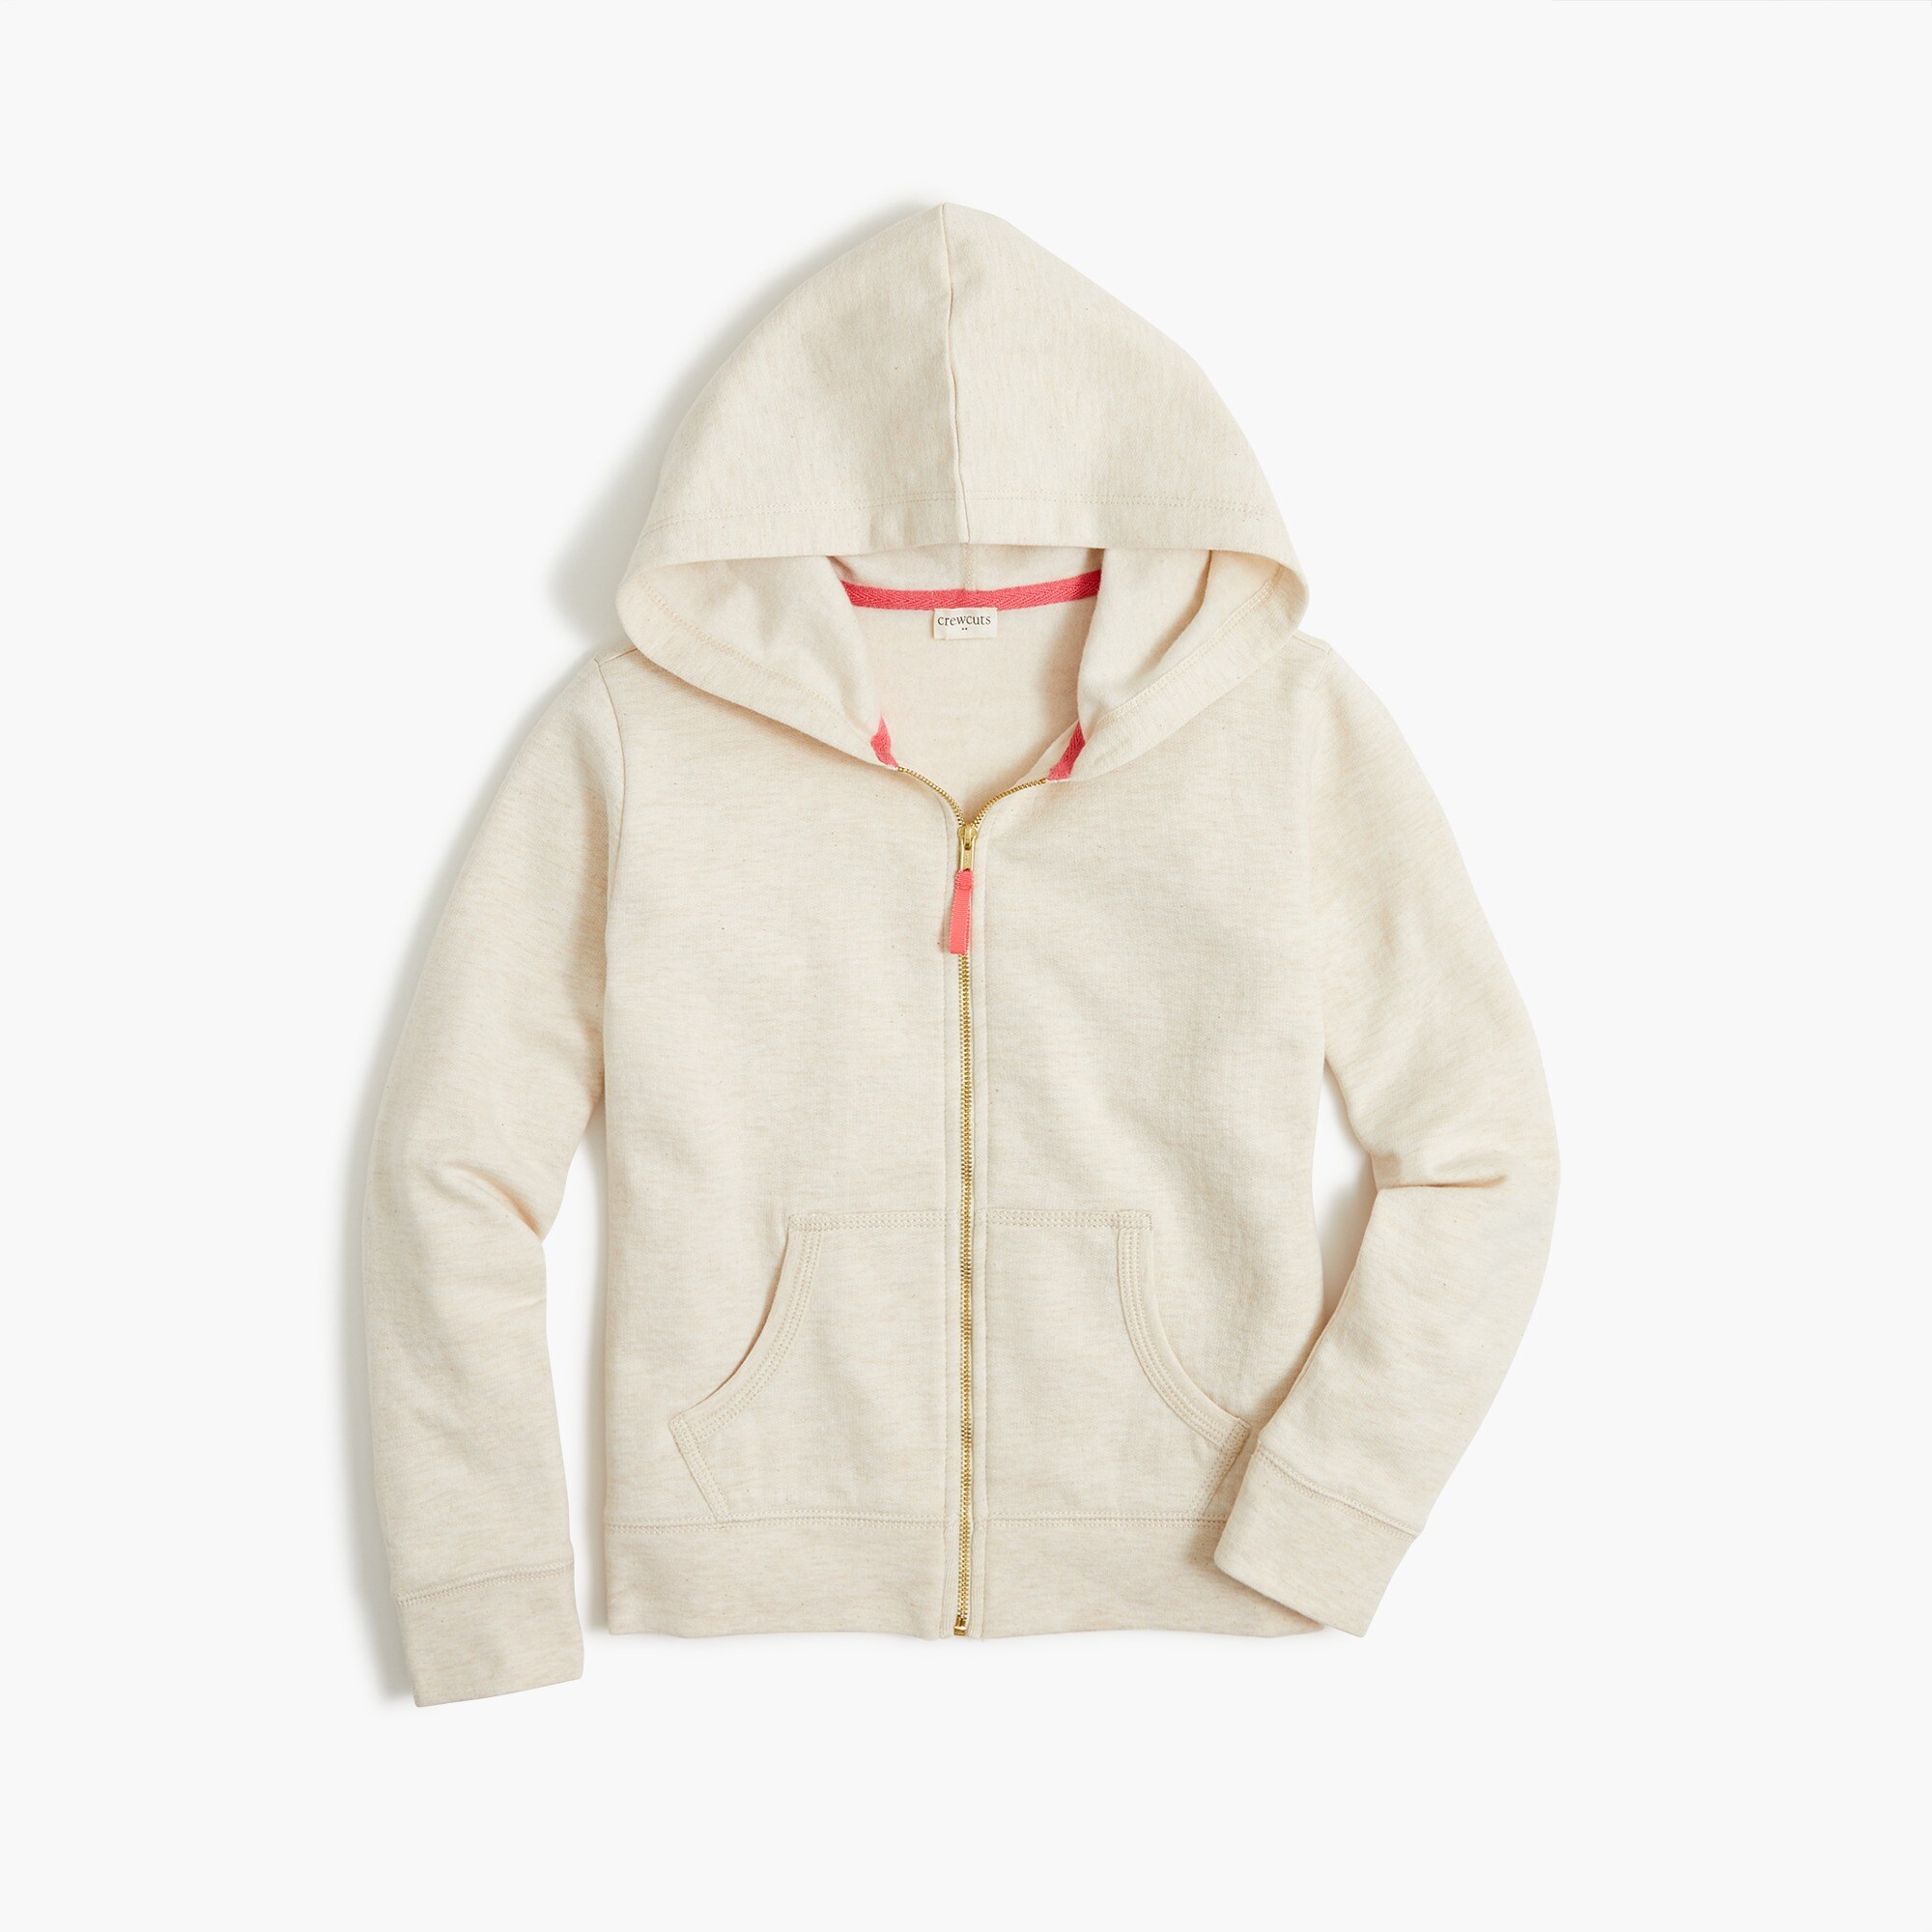 girls Girls' full-zip cotton-blend hoodie